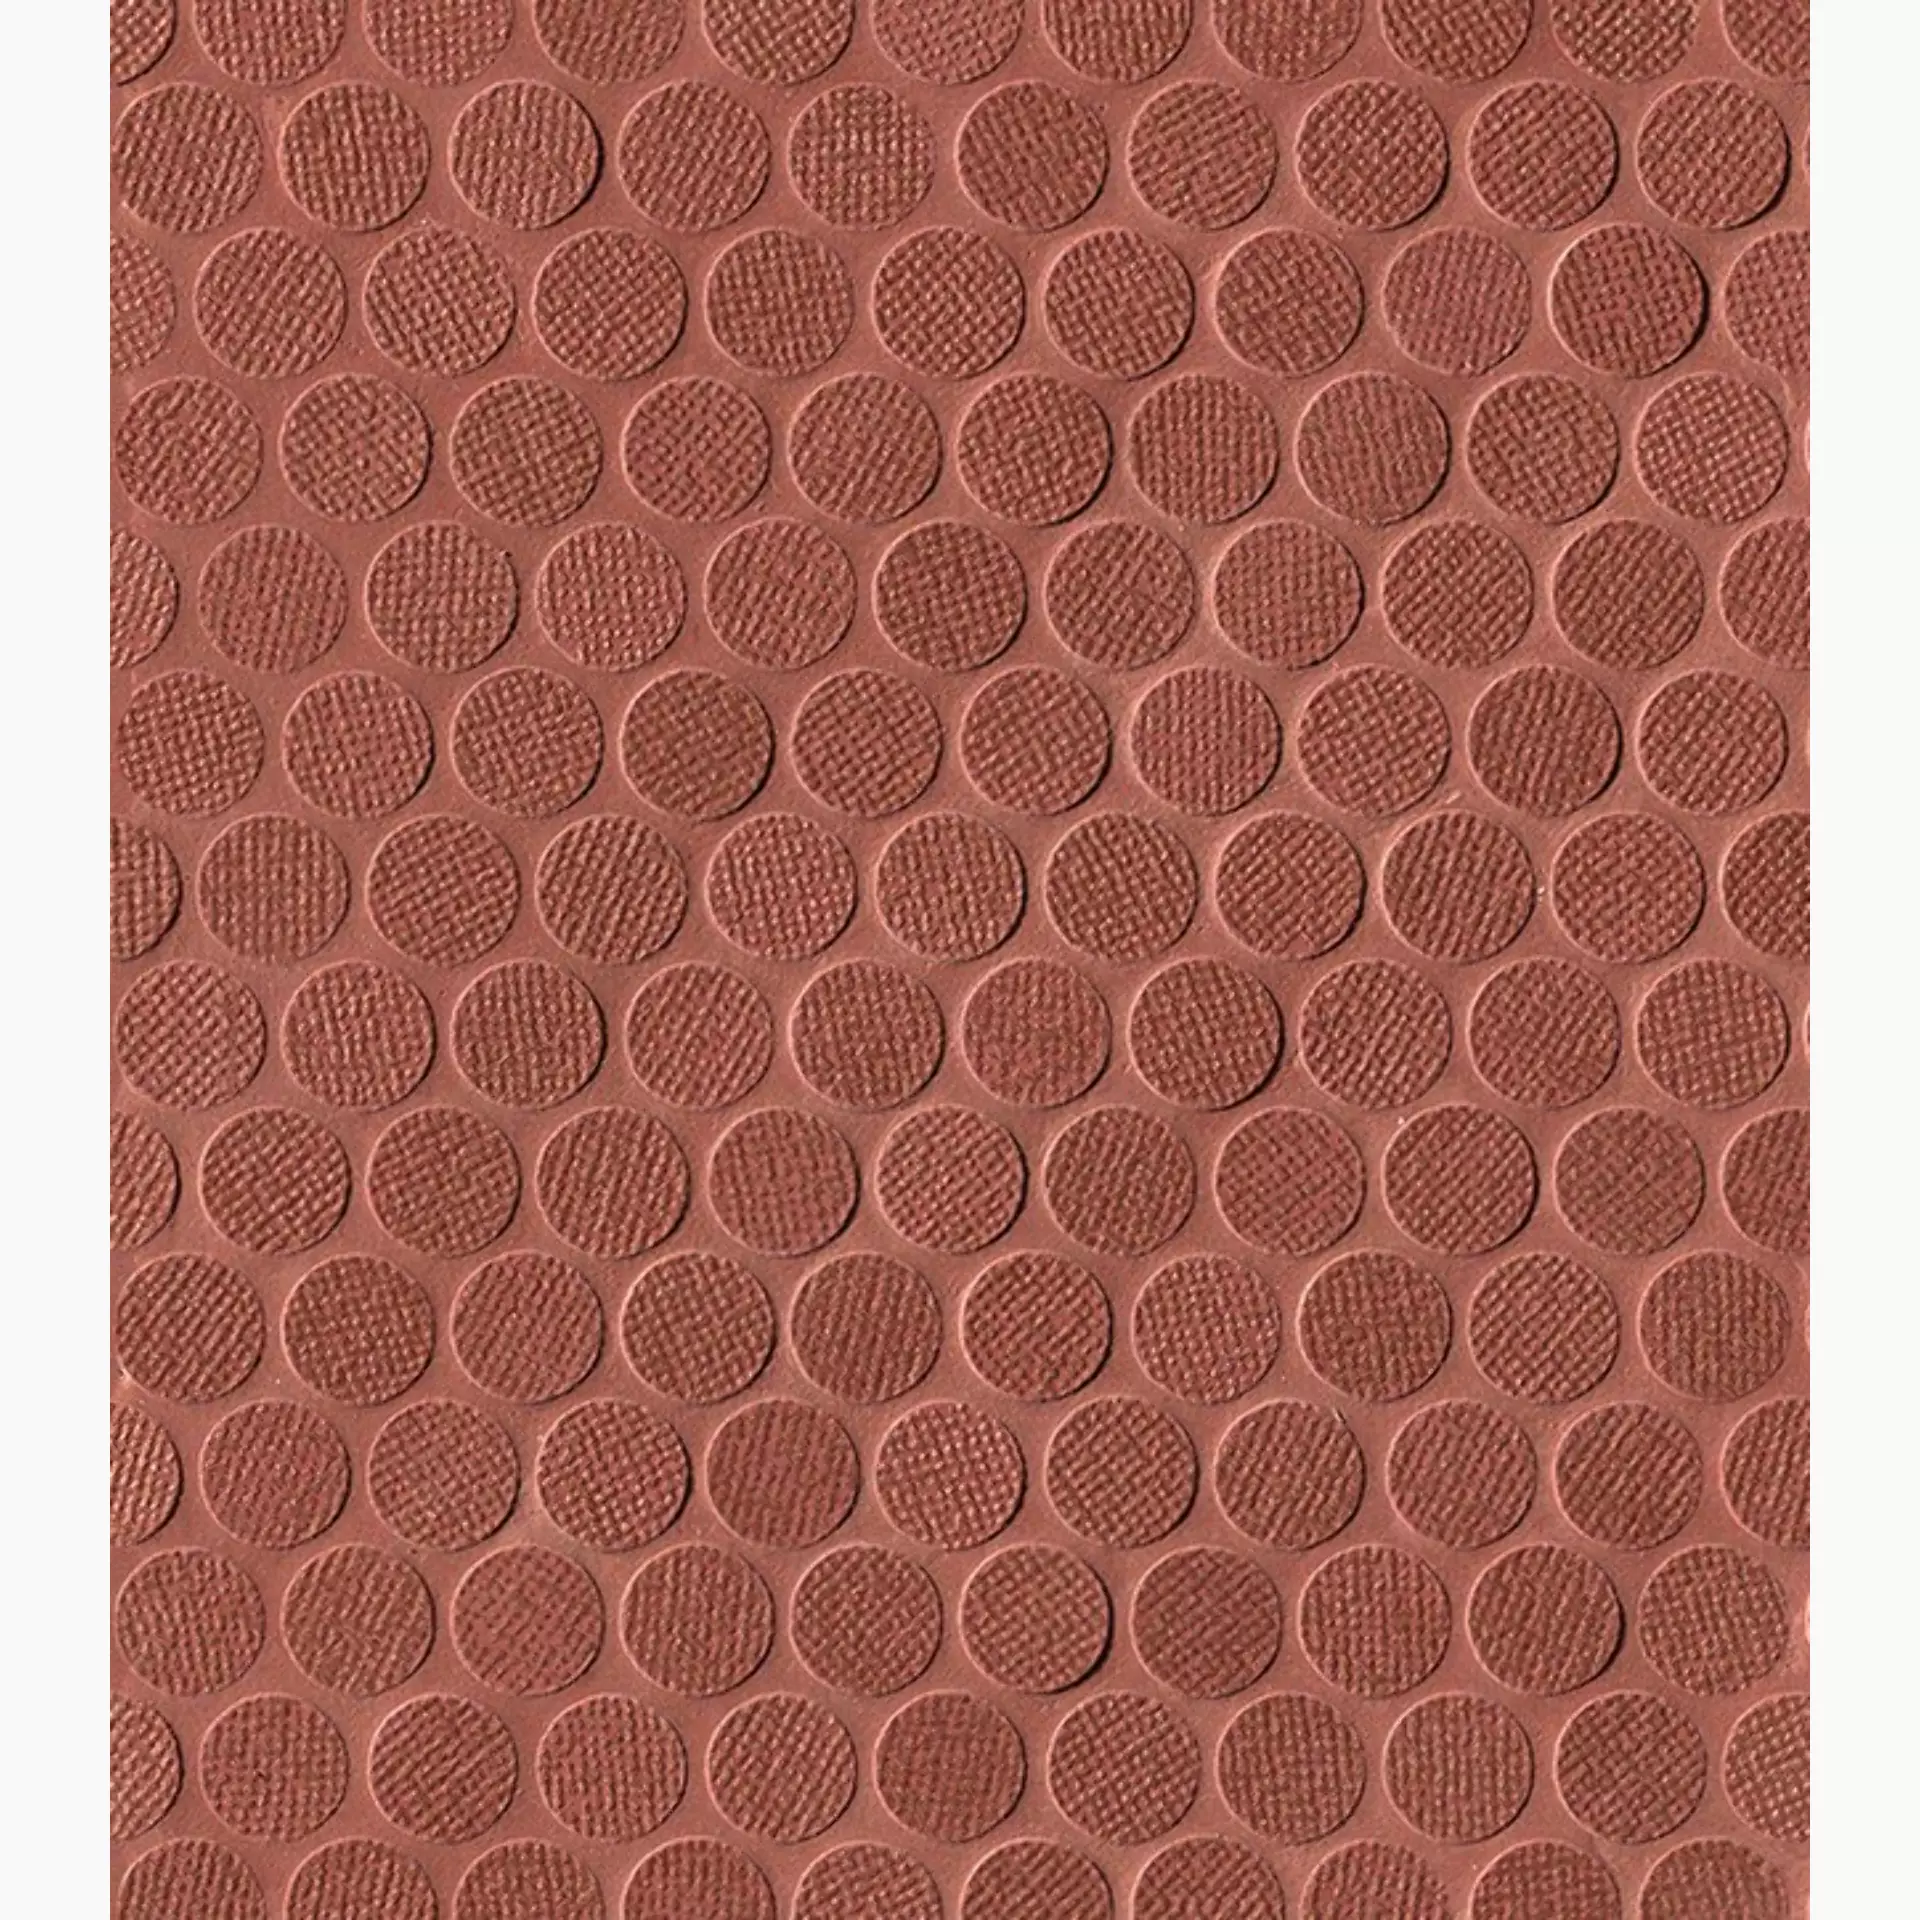 FAP Color Line Marsala – Copper Matt Marsala – Copper fNML matt 29,5x35cm Mosaik Round